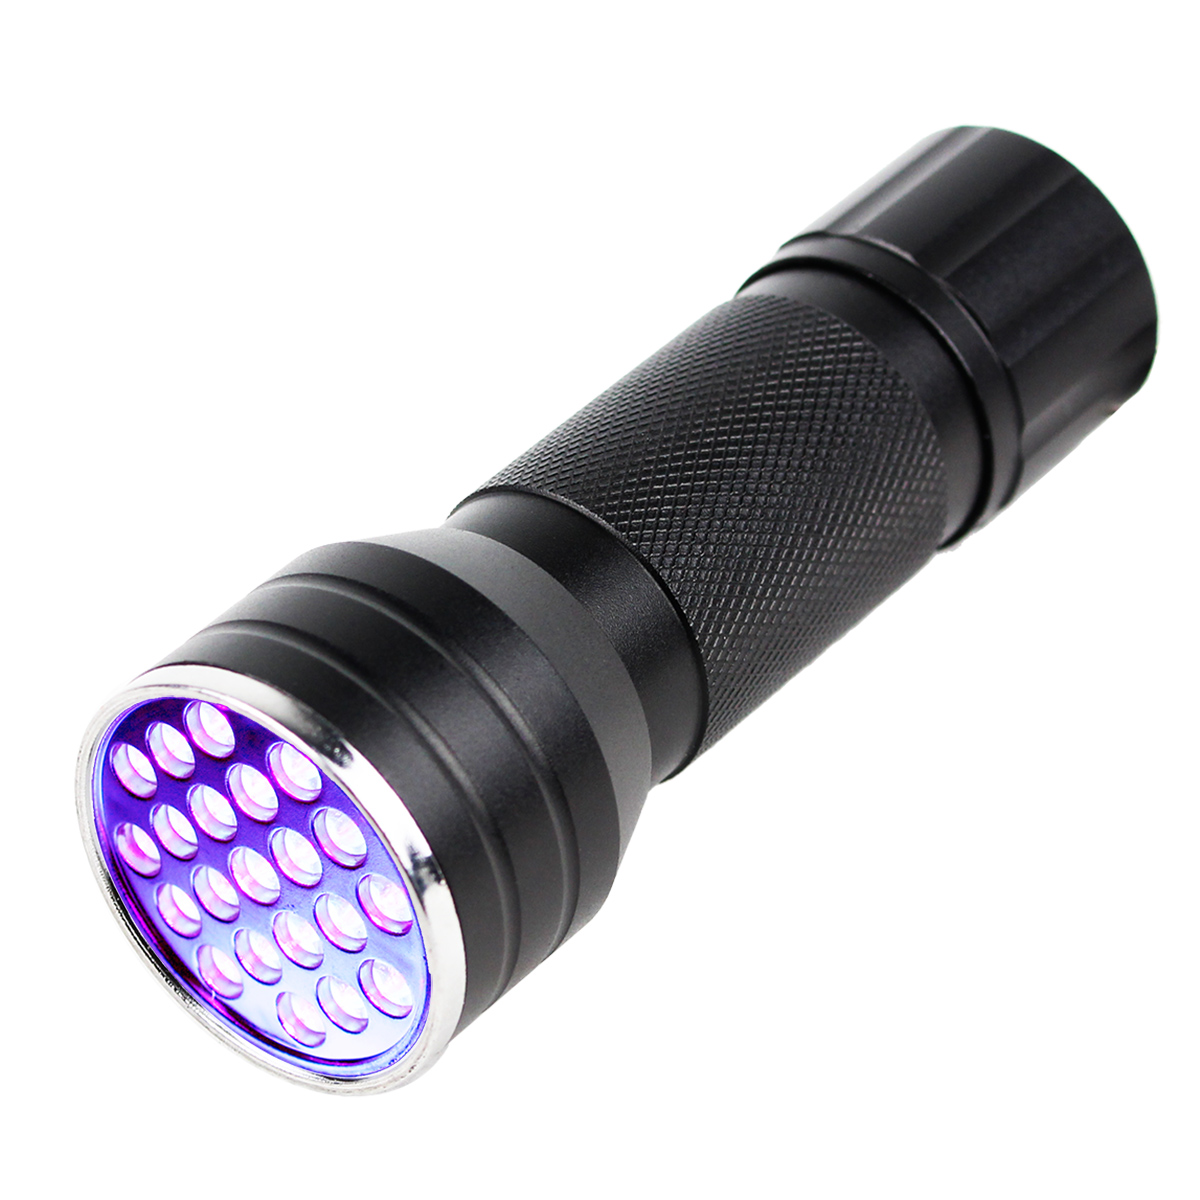 UV Flashlight with 21 LED diodes